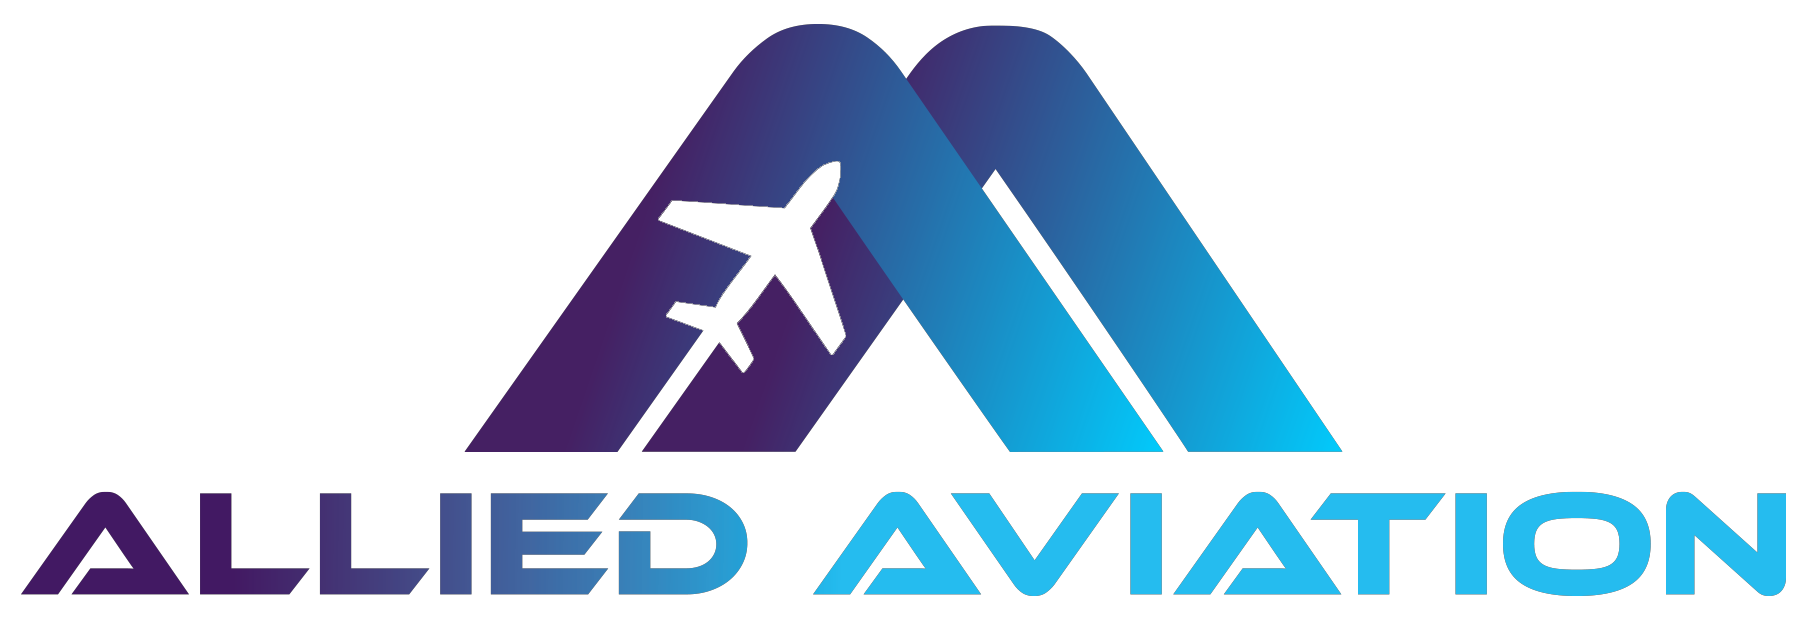 Allied Aviation Logo